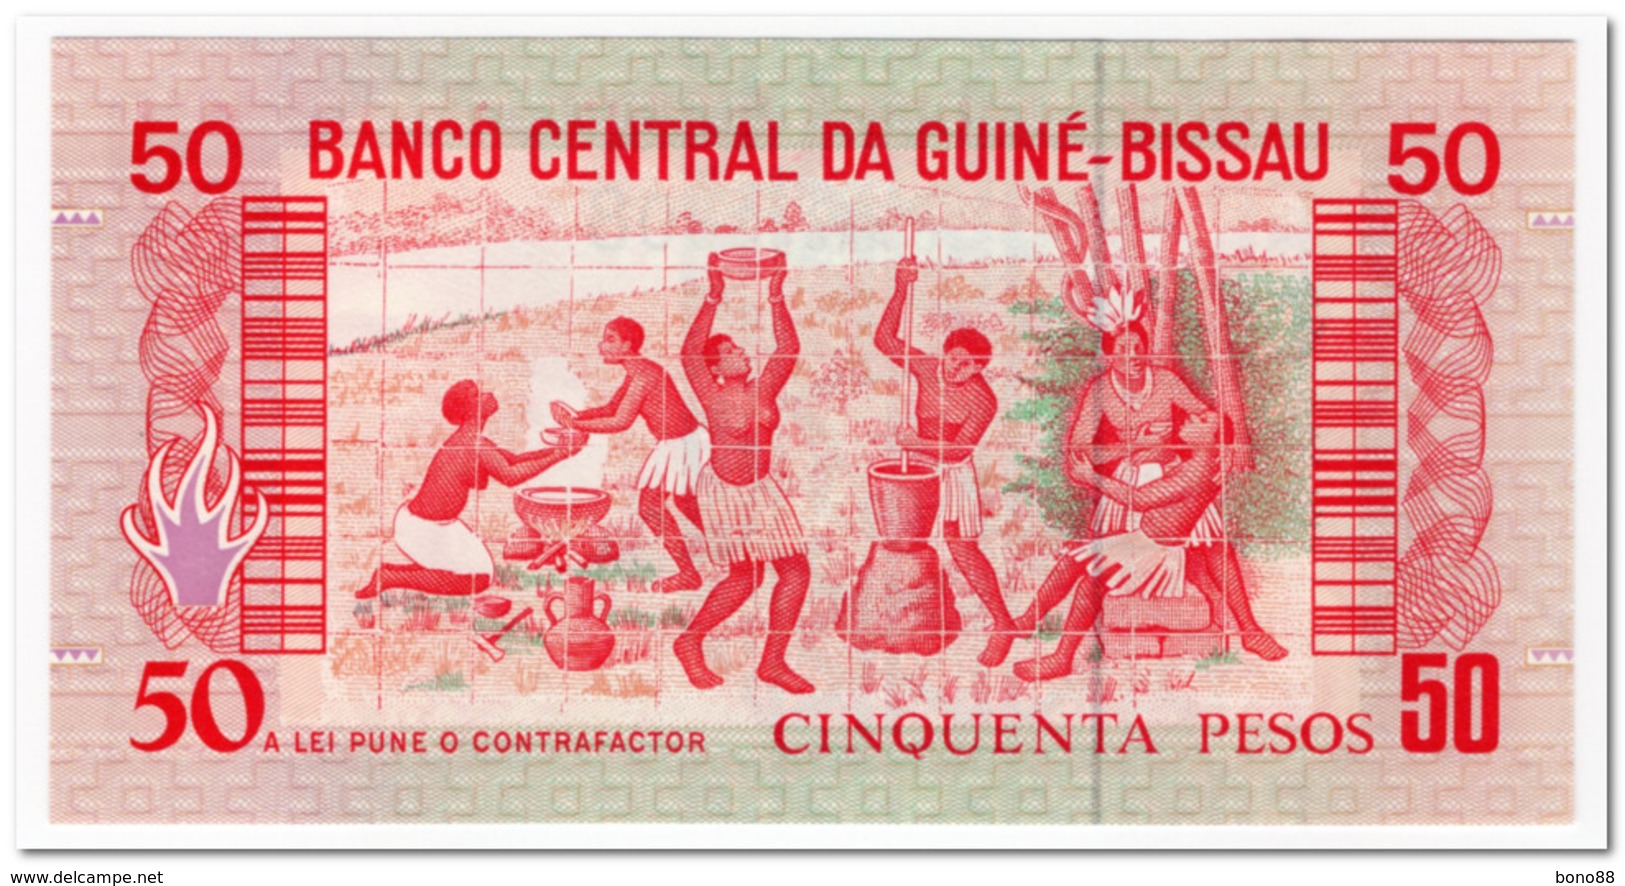 GUINEA-BISSAU,50 PESOS,1990,P.10,UNC - Guinea-Bissau